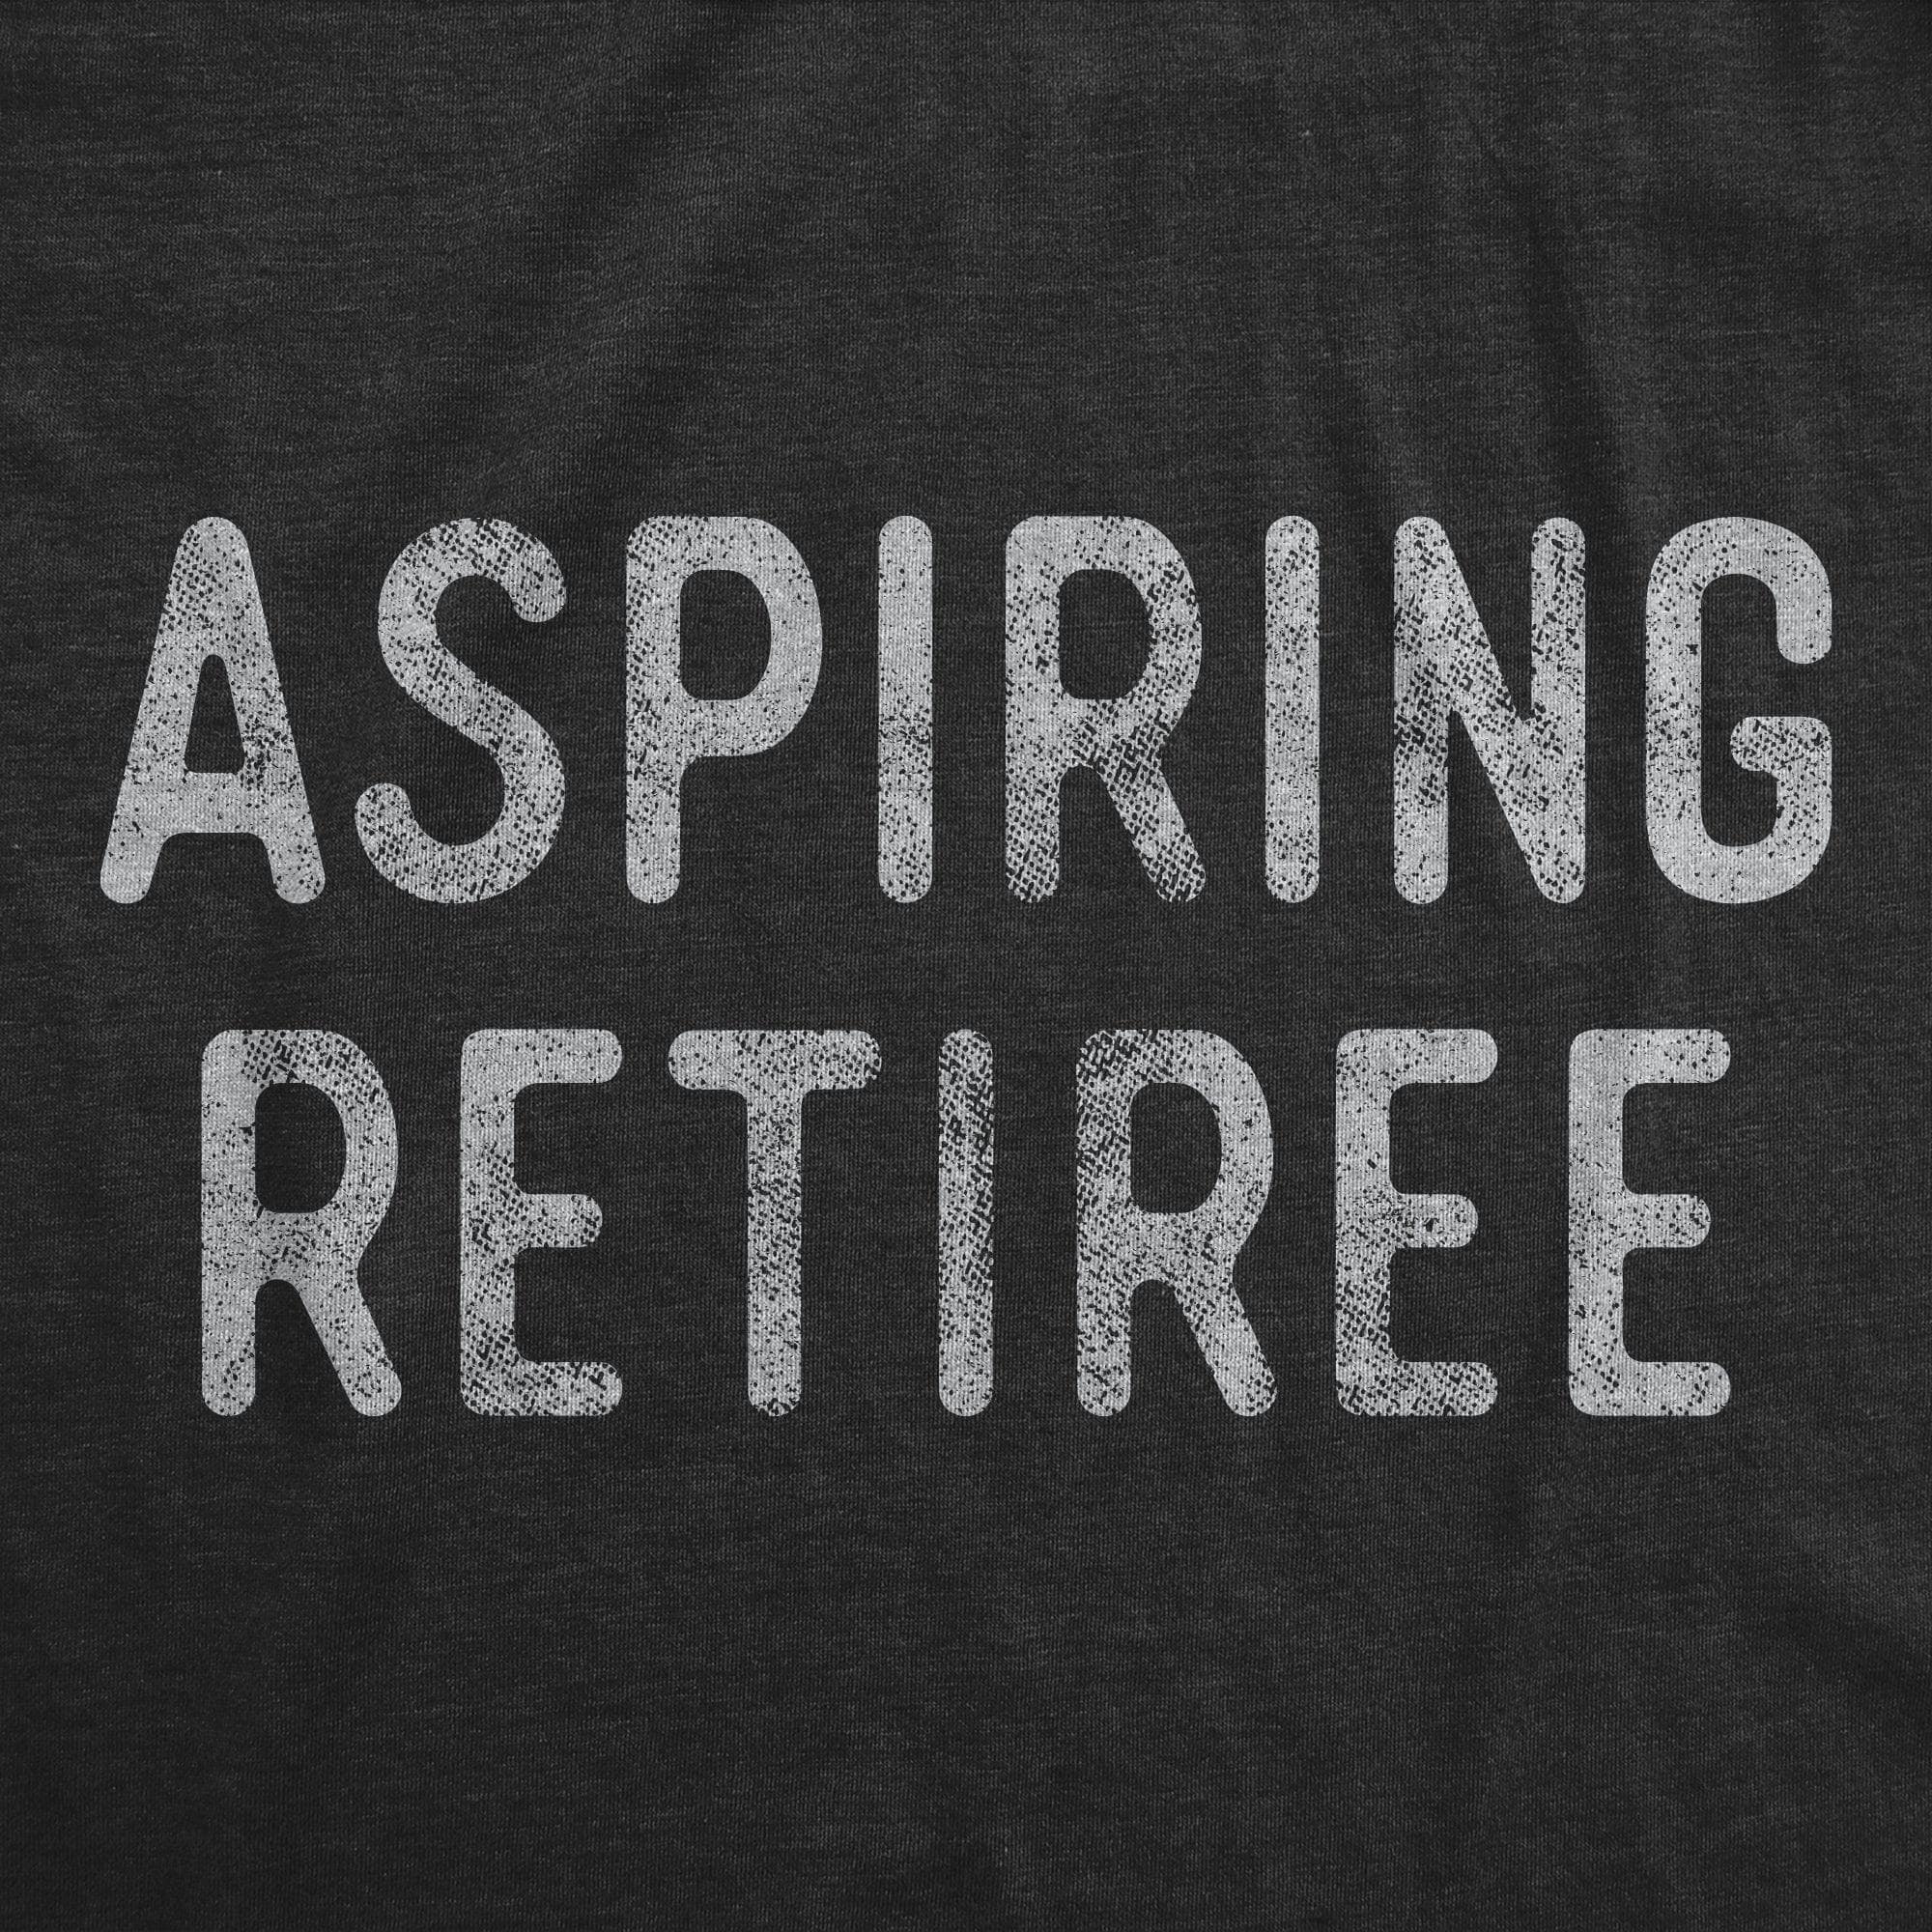 Aspiring Retiree Women's Tshirt  -  Crazy Dog T-Shirts